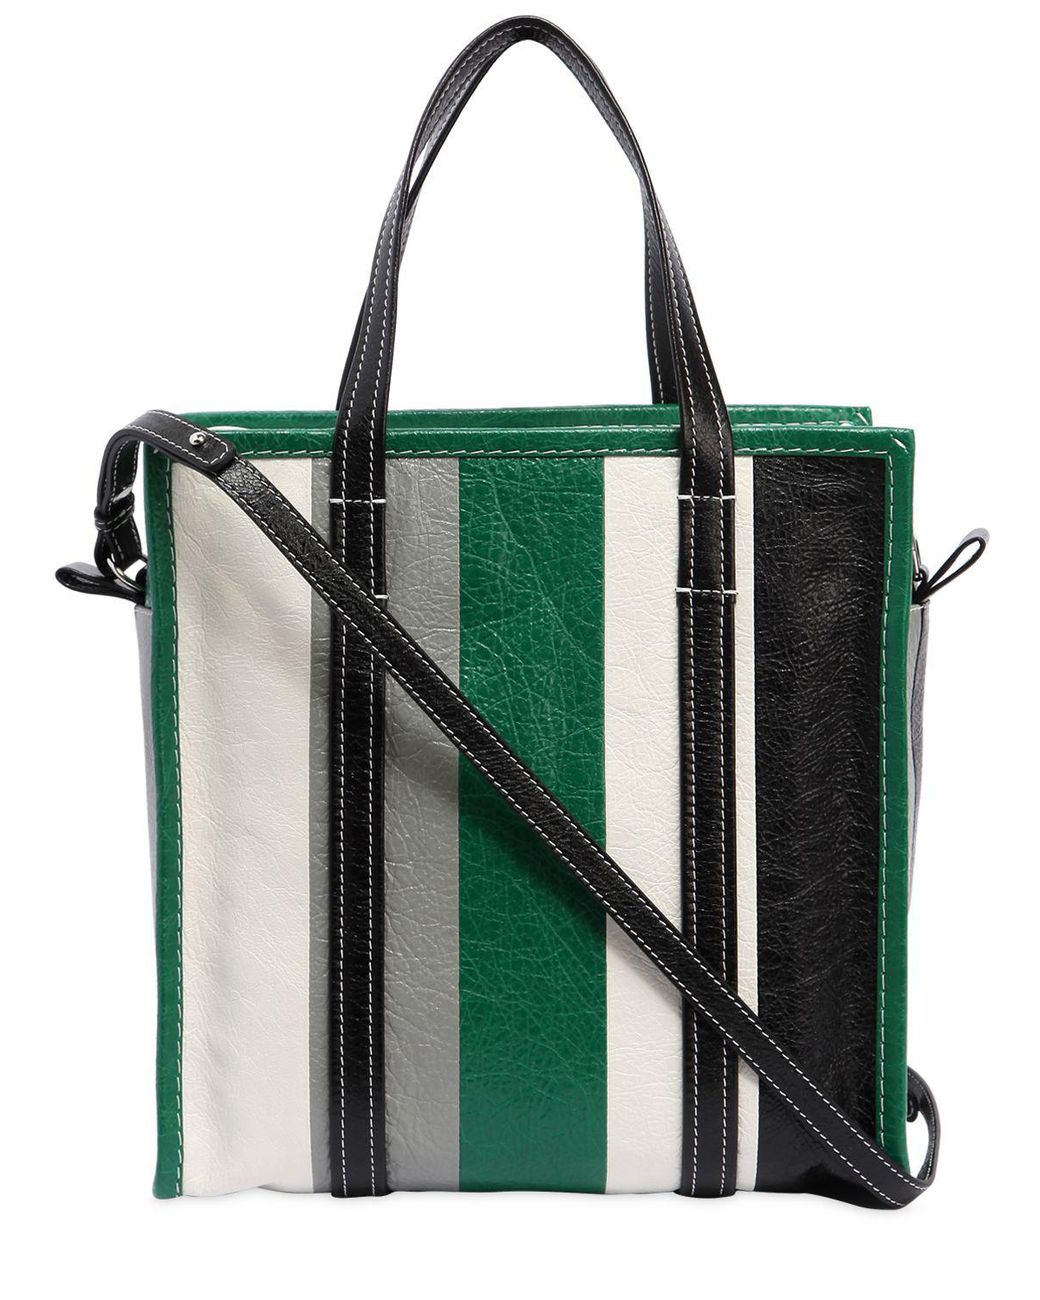 Balenciaga Small Bazar Striped Leather Tote Bag in Green | Lyst